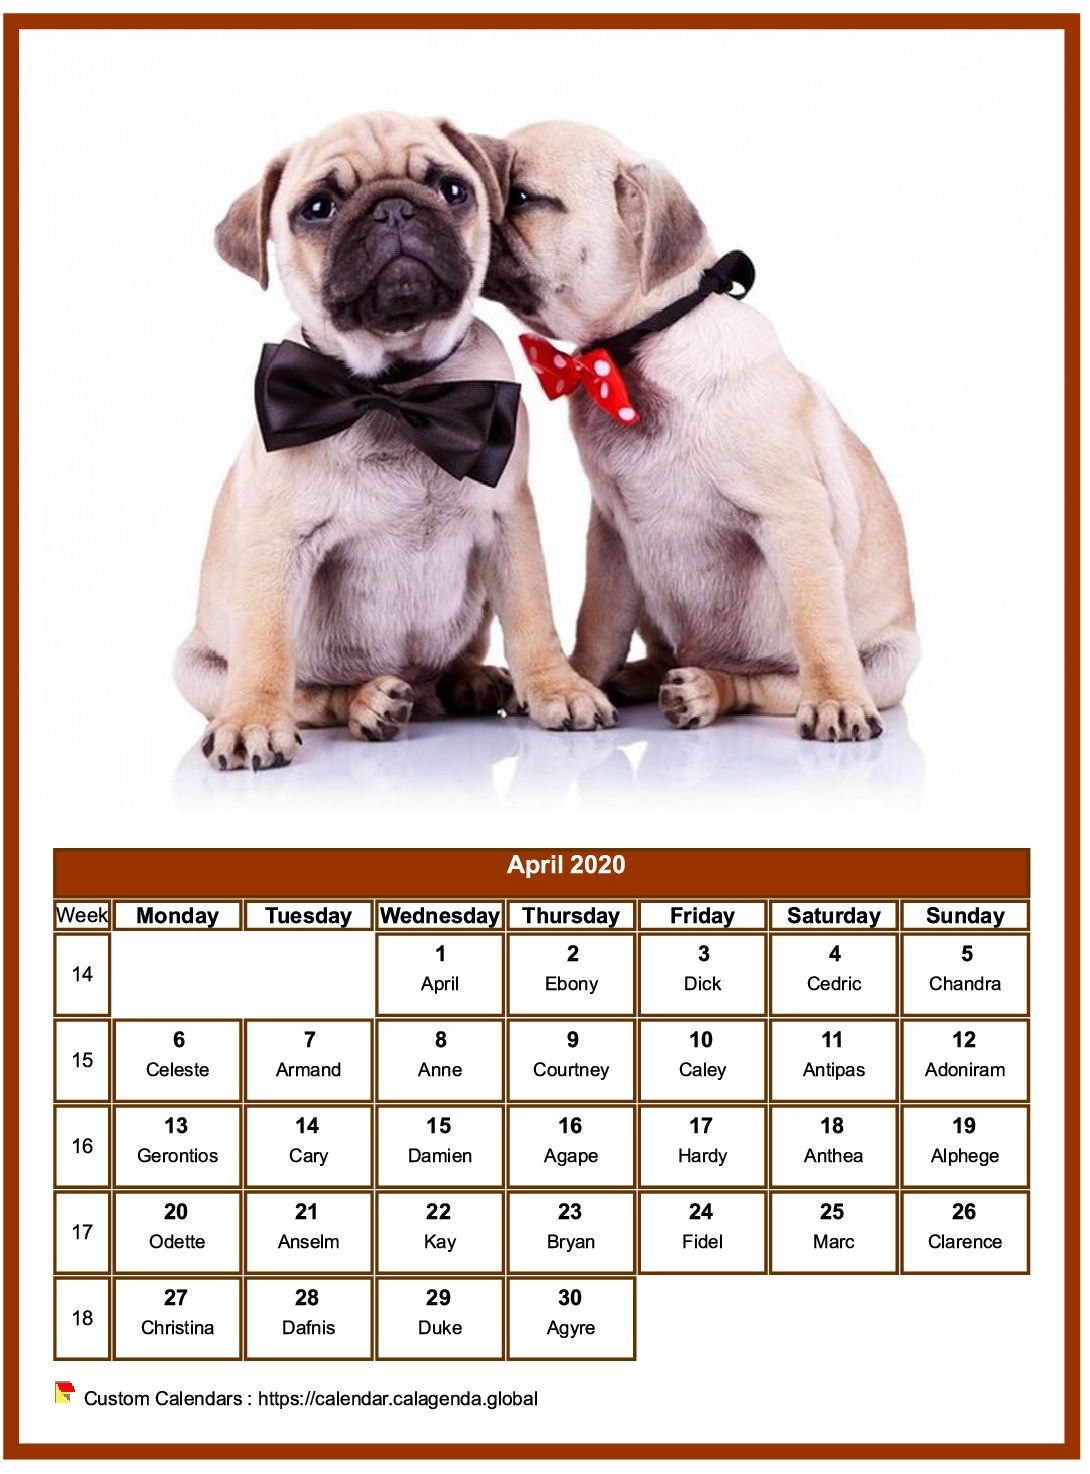 Calendar April 2020 dogs